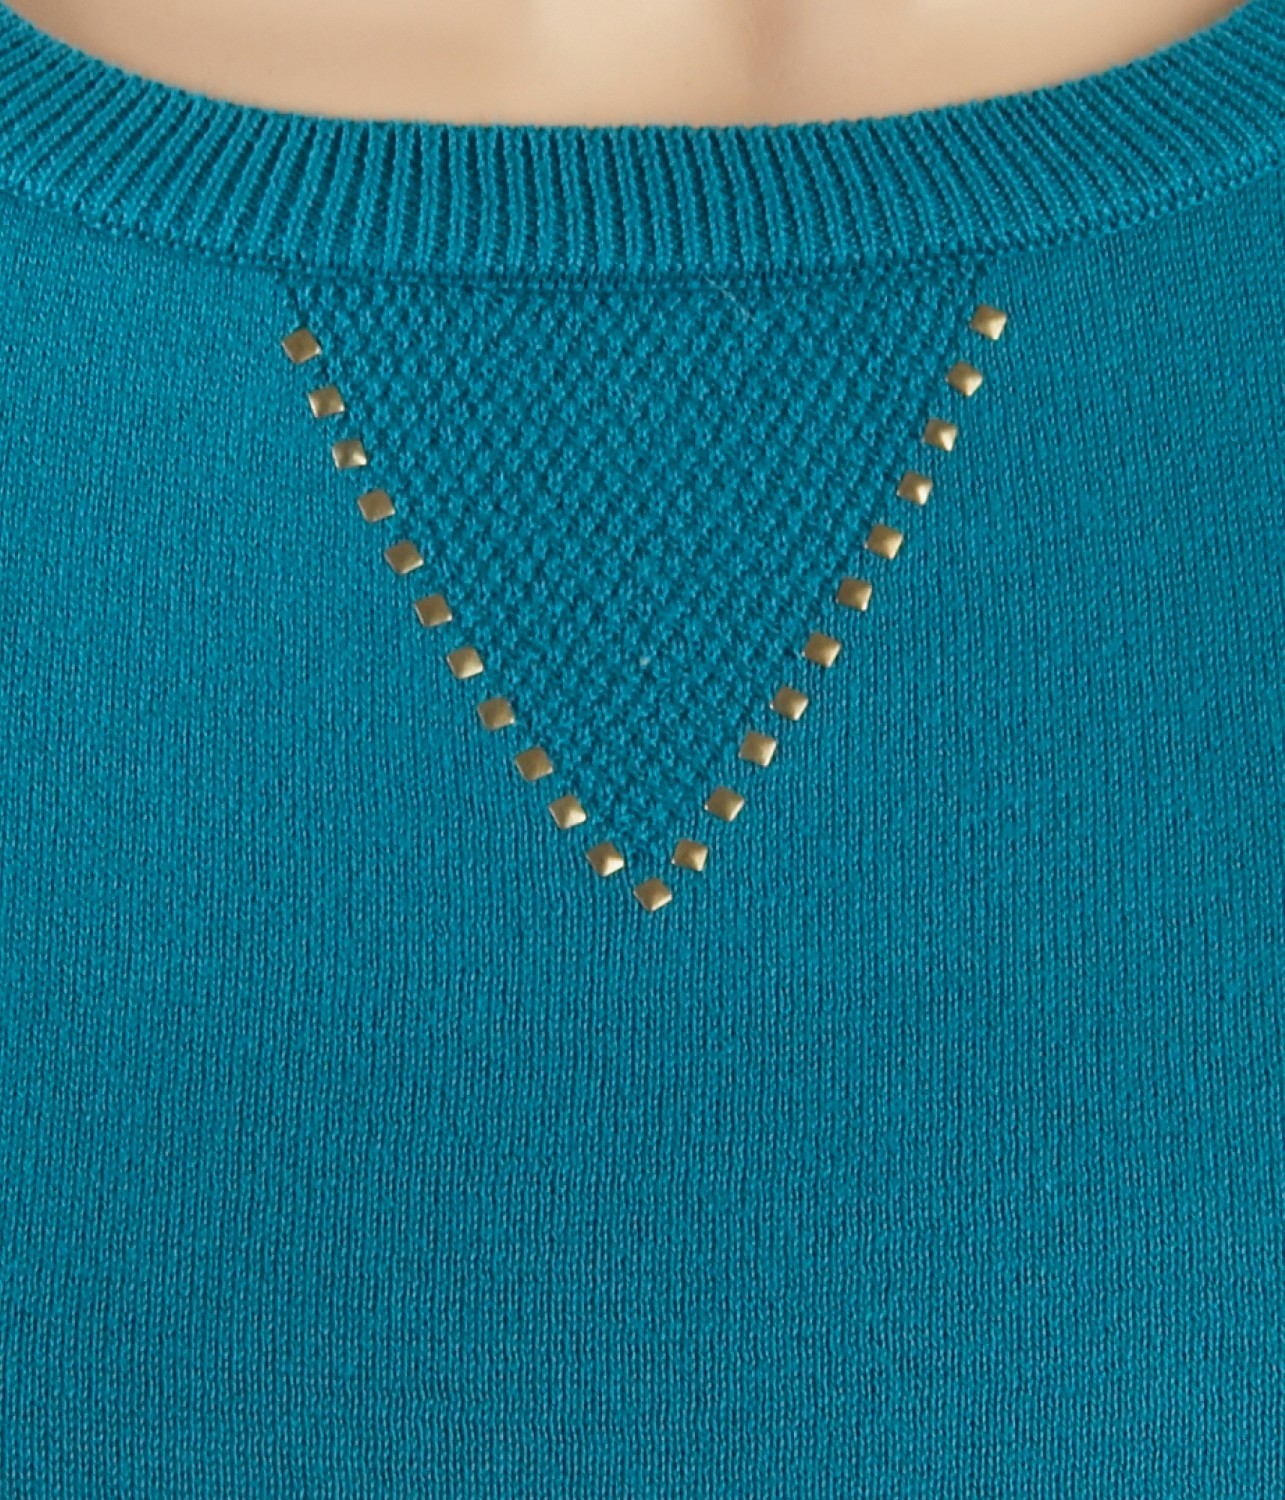 Camaieu kék márkás divatos pulóver 2013.2.6 fotója